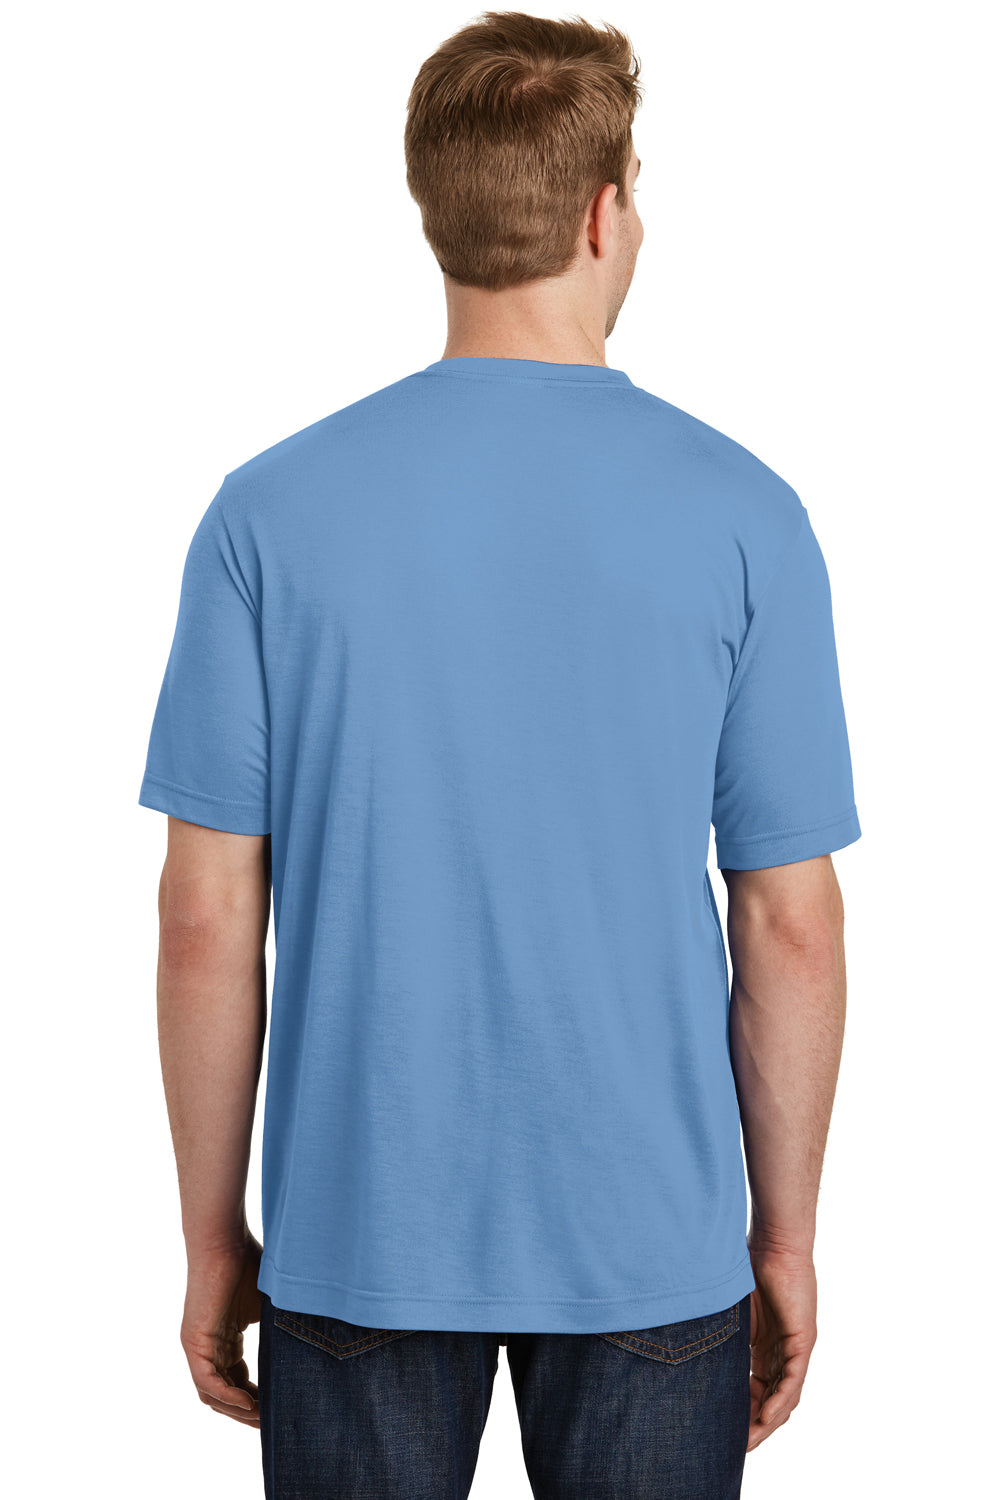 Sport-Tek ST450 Mens Competitor Moisture Wicking Short Sleeve Crewneck T-Shirt Carolina Blue Back